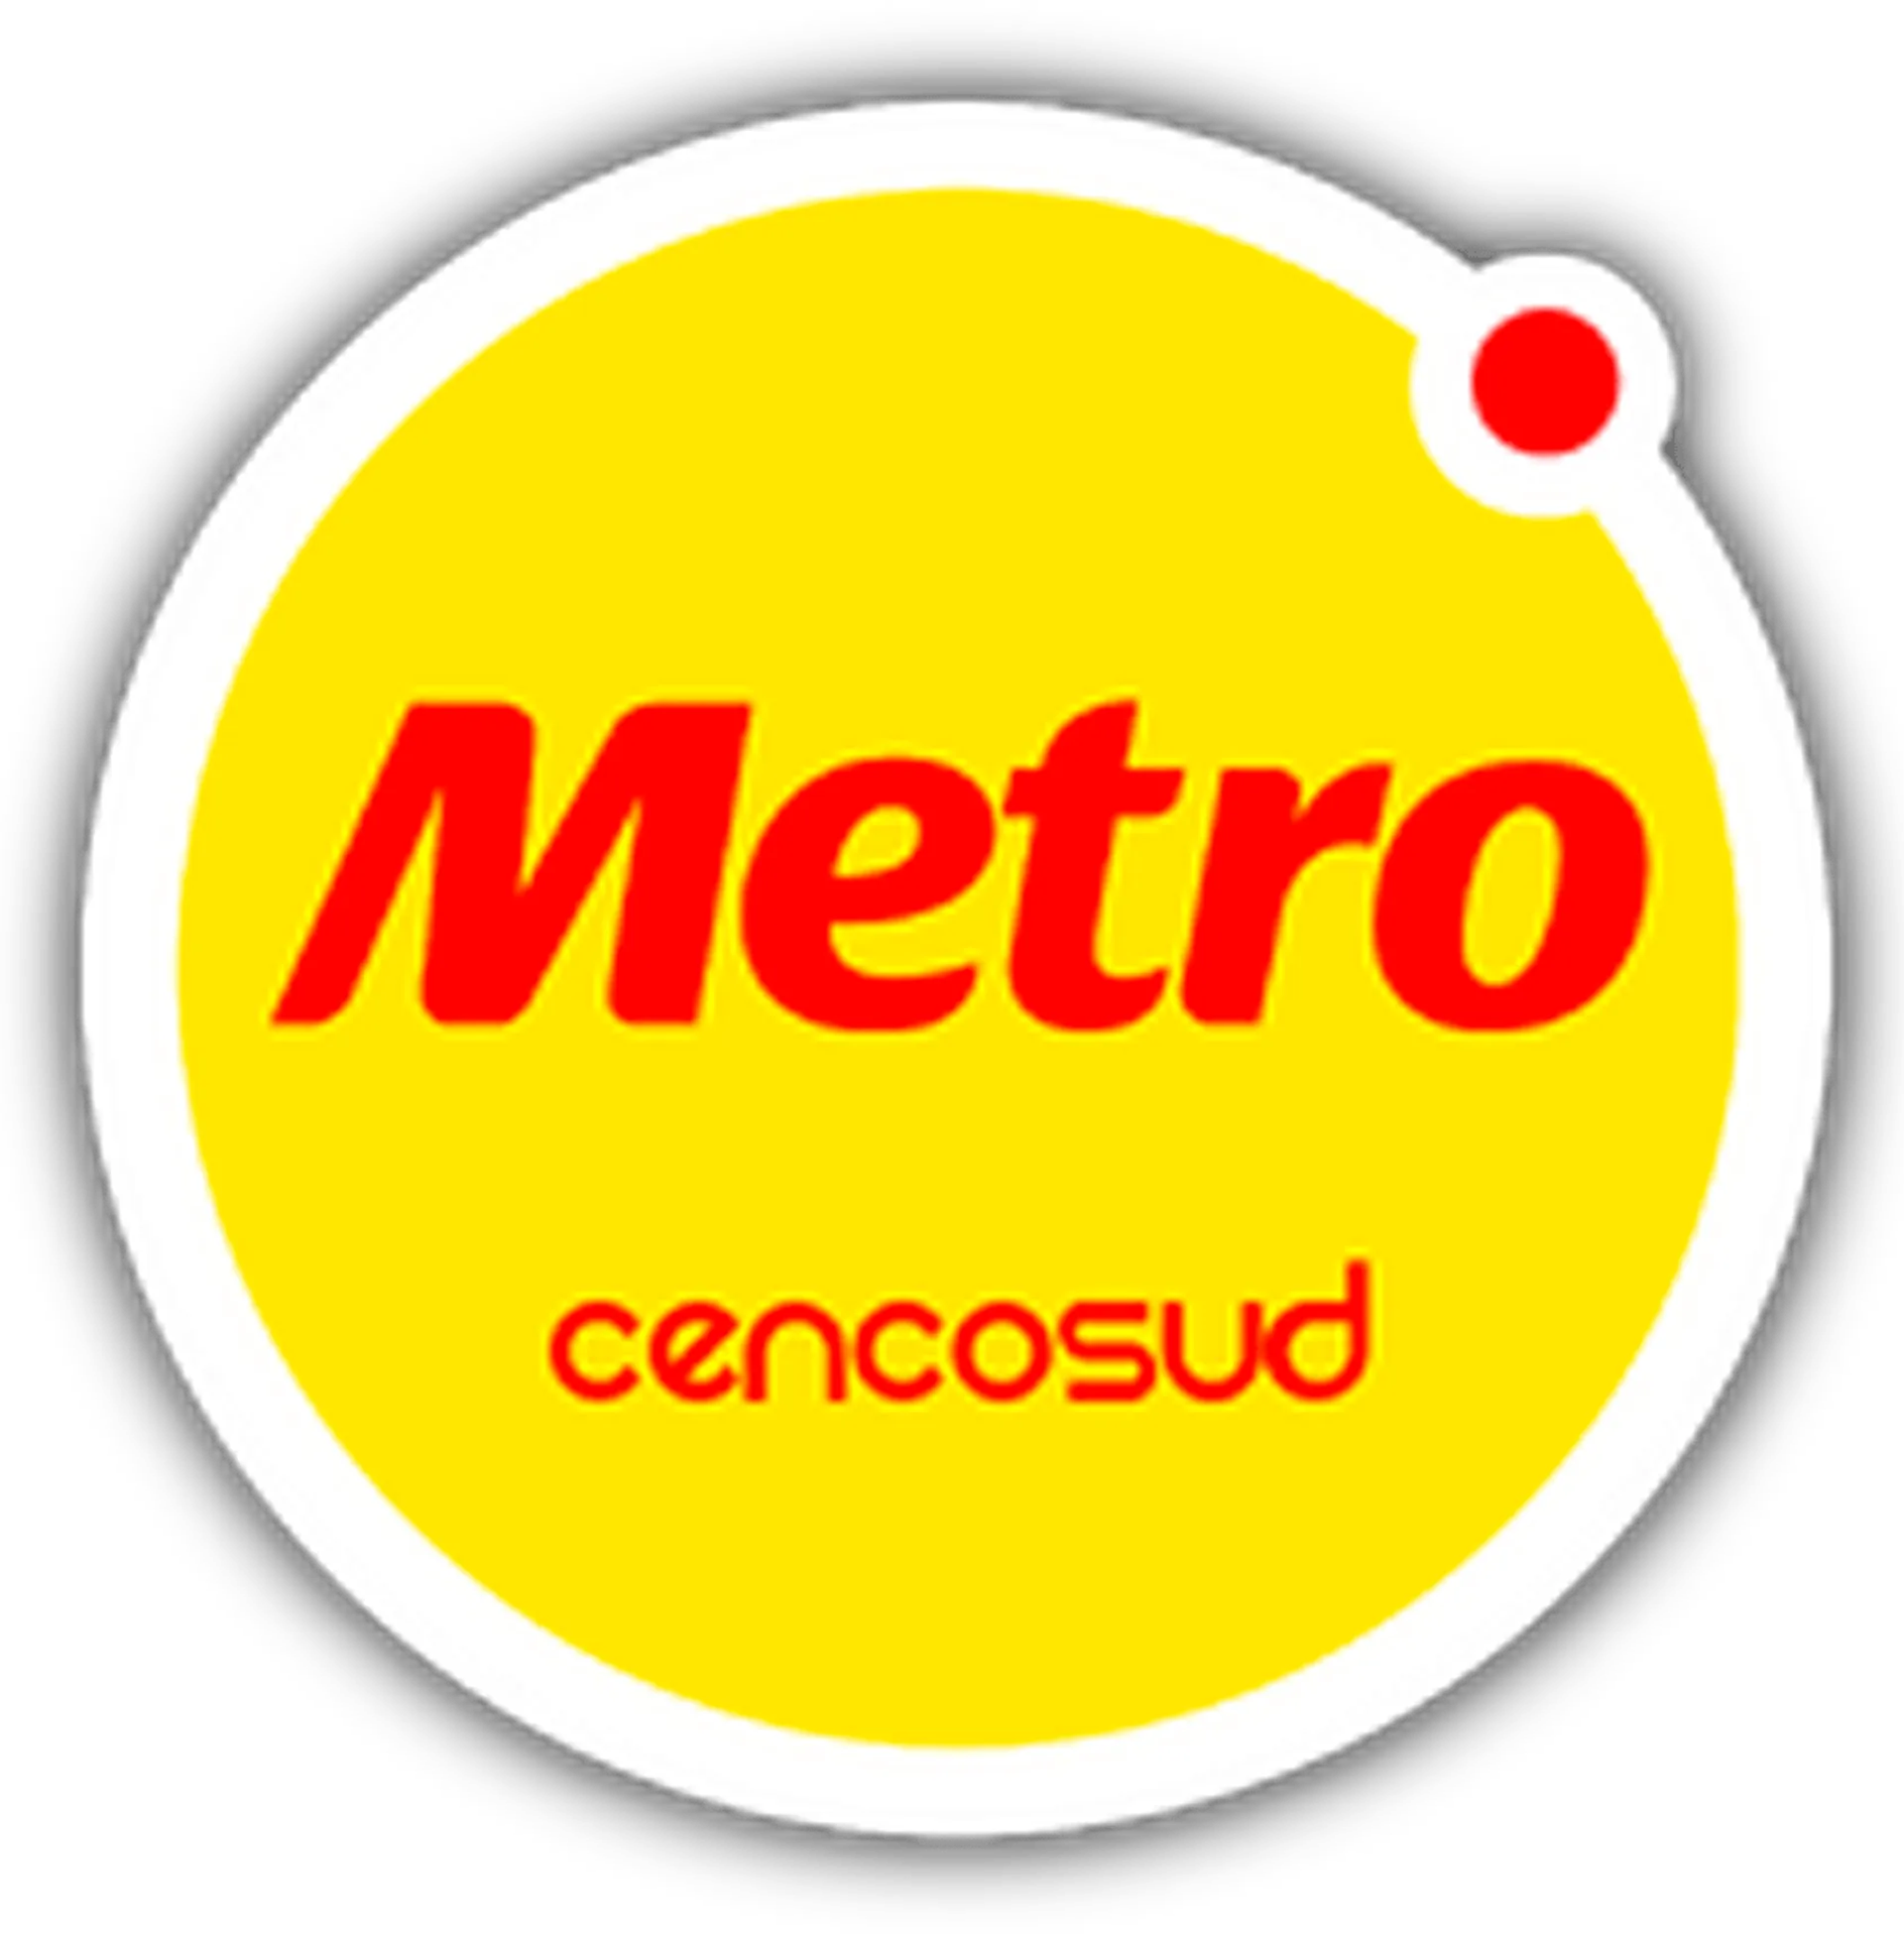 METRO logo